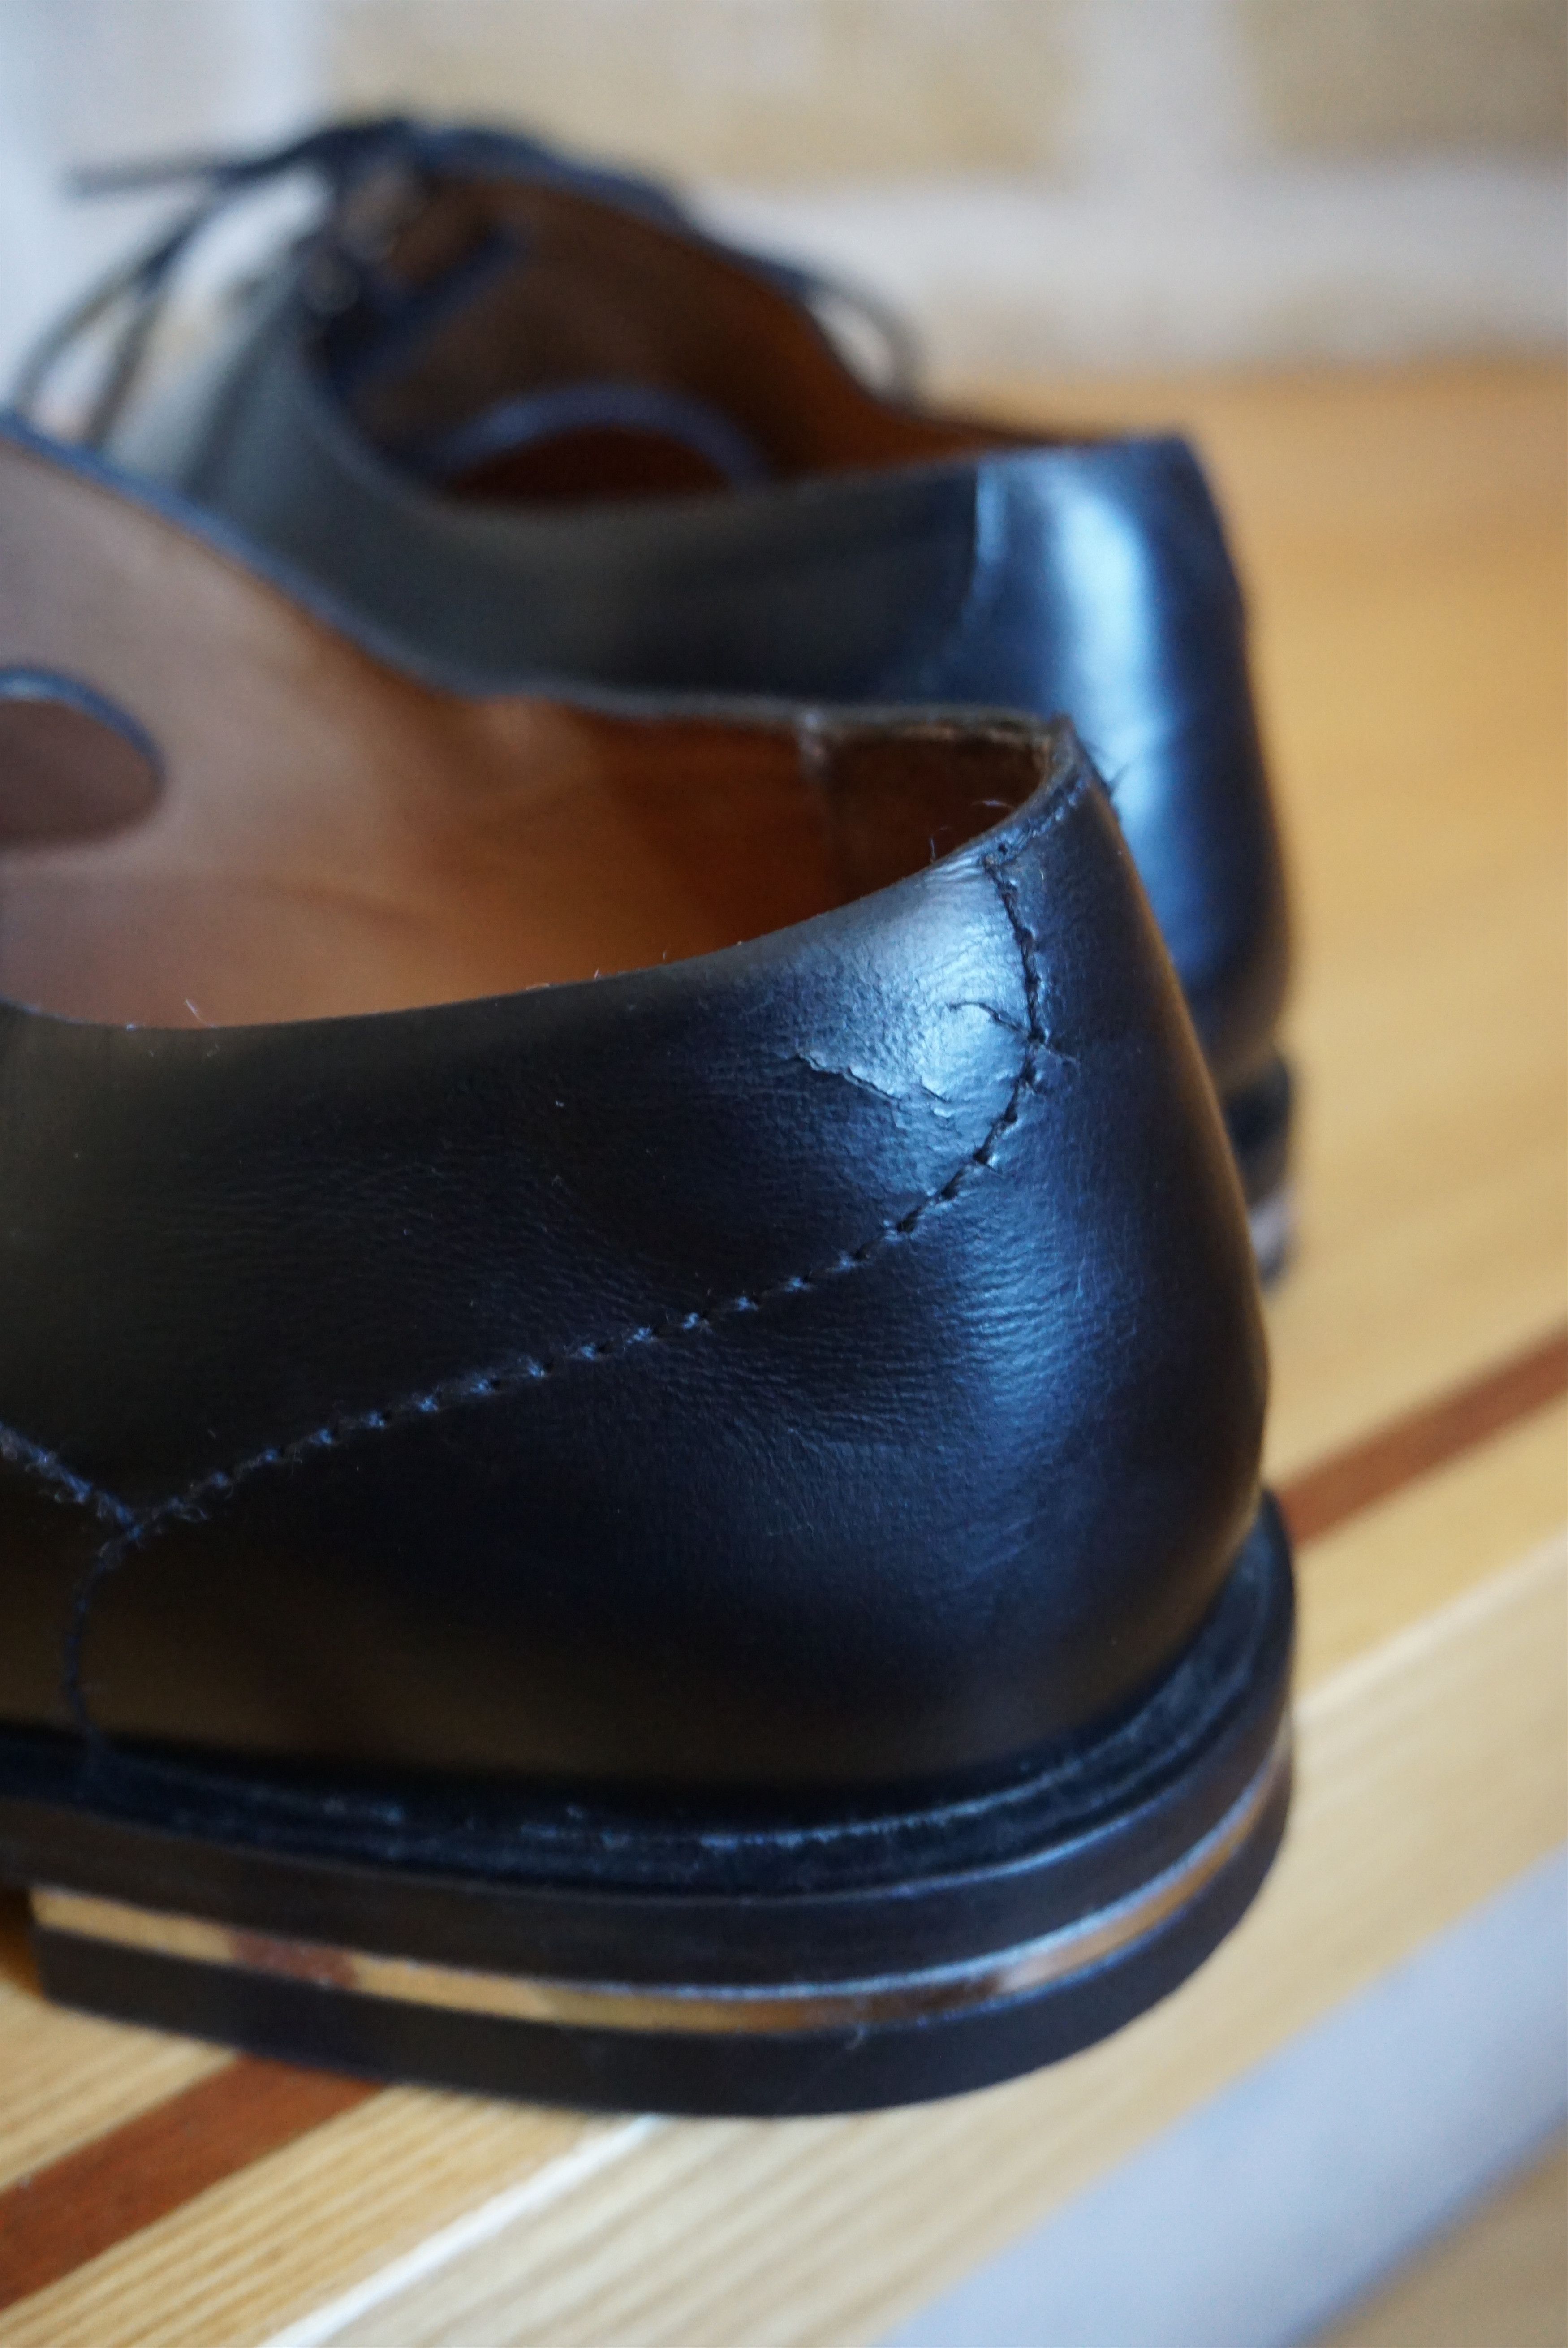 Cos COS RPR$250 leather office shoes EU44 black formal lace up Size US 10.5 / EU 43-44 - 24 Thumbnail